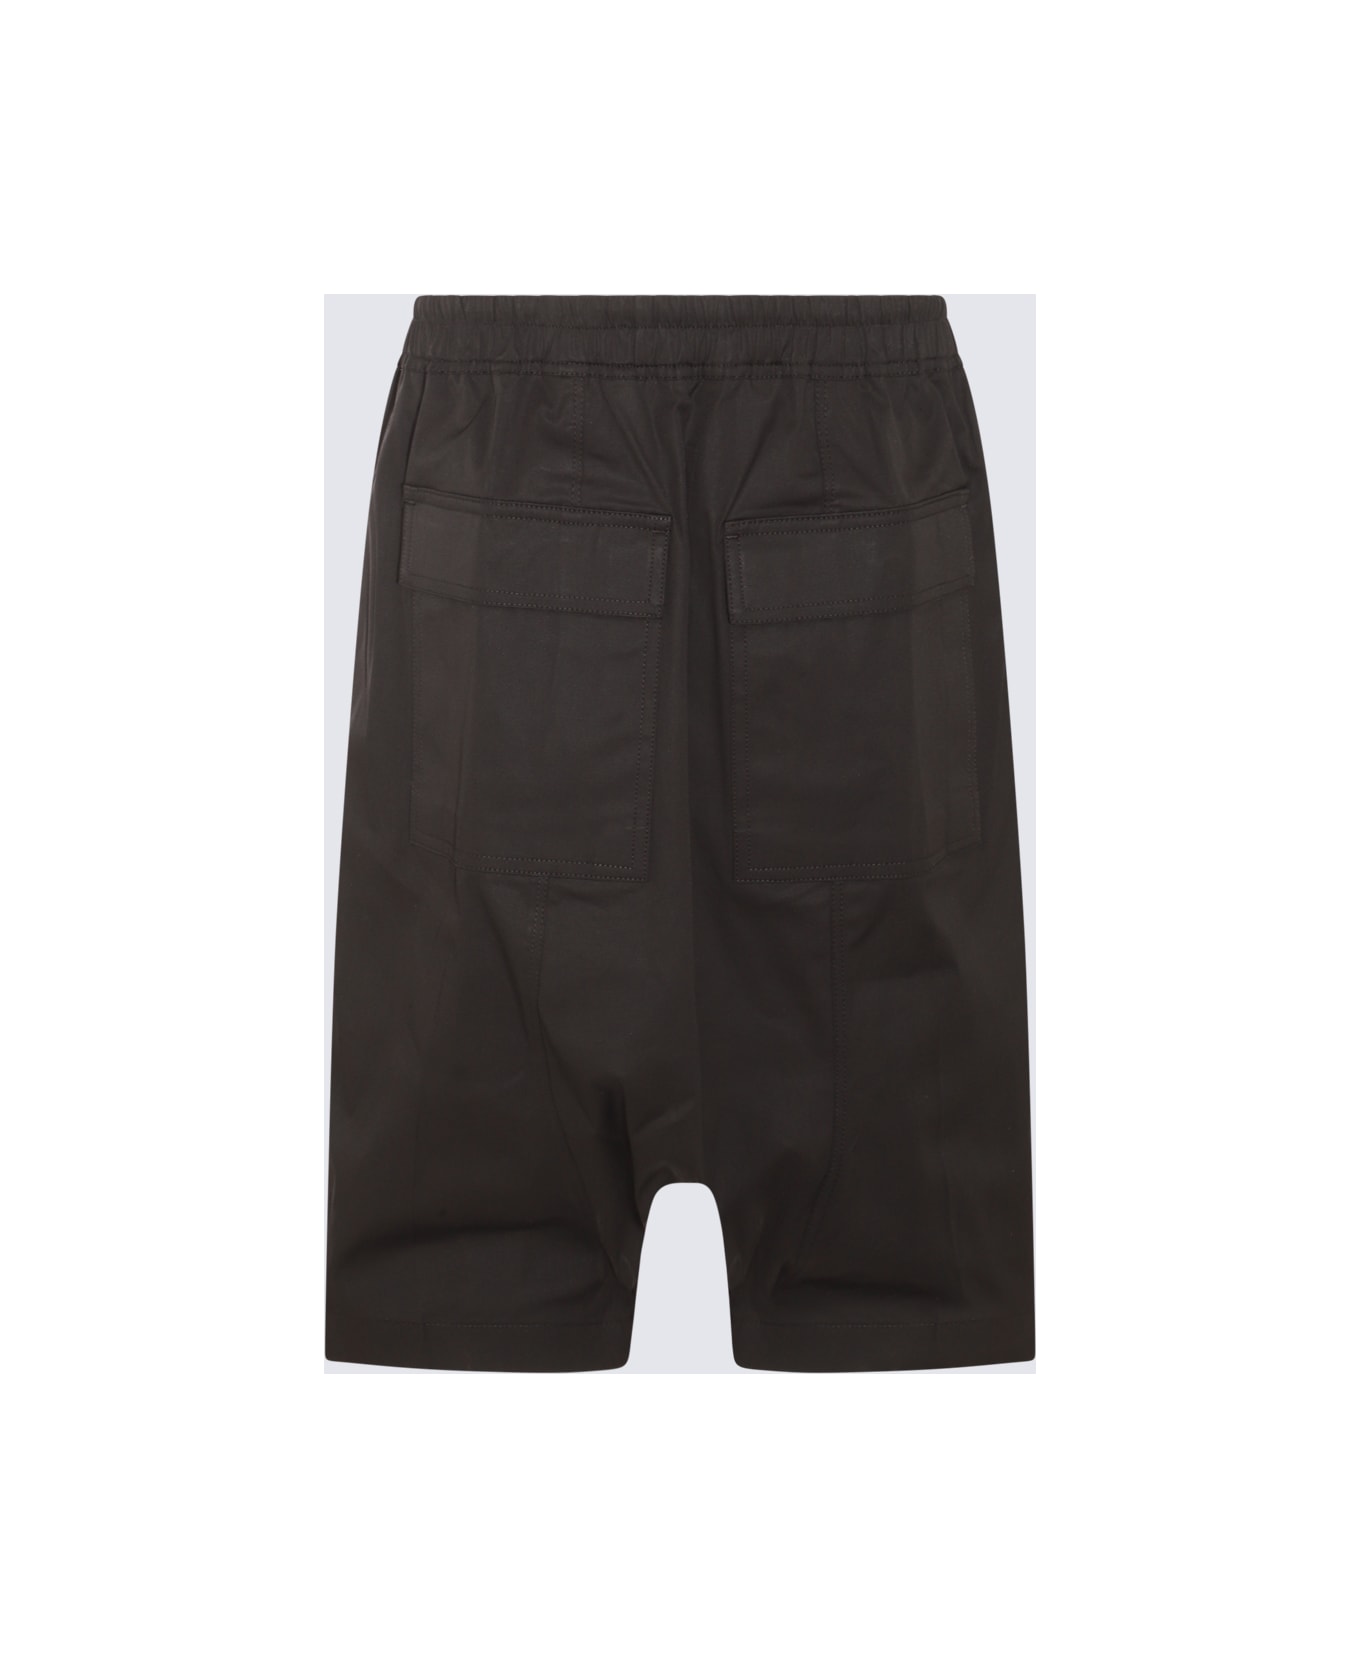 Rick Owens Black Cotton Shorts - Black